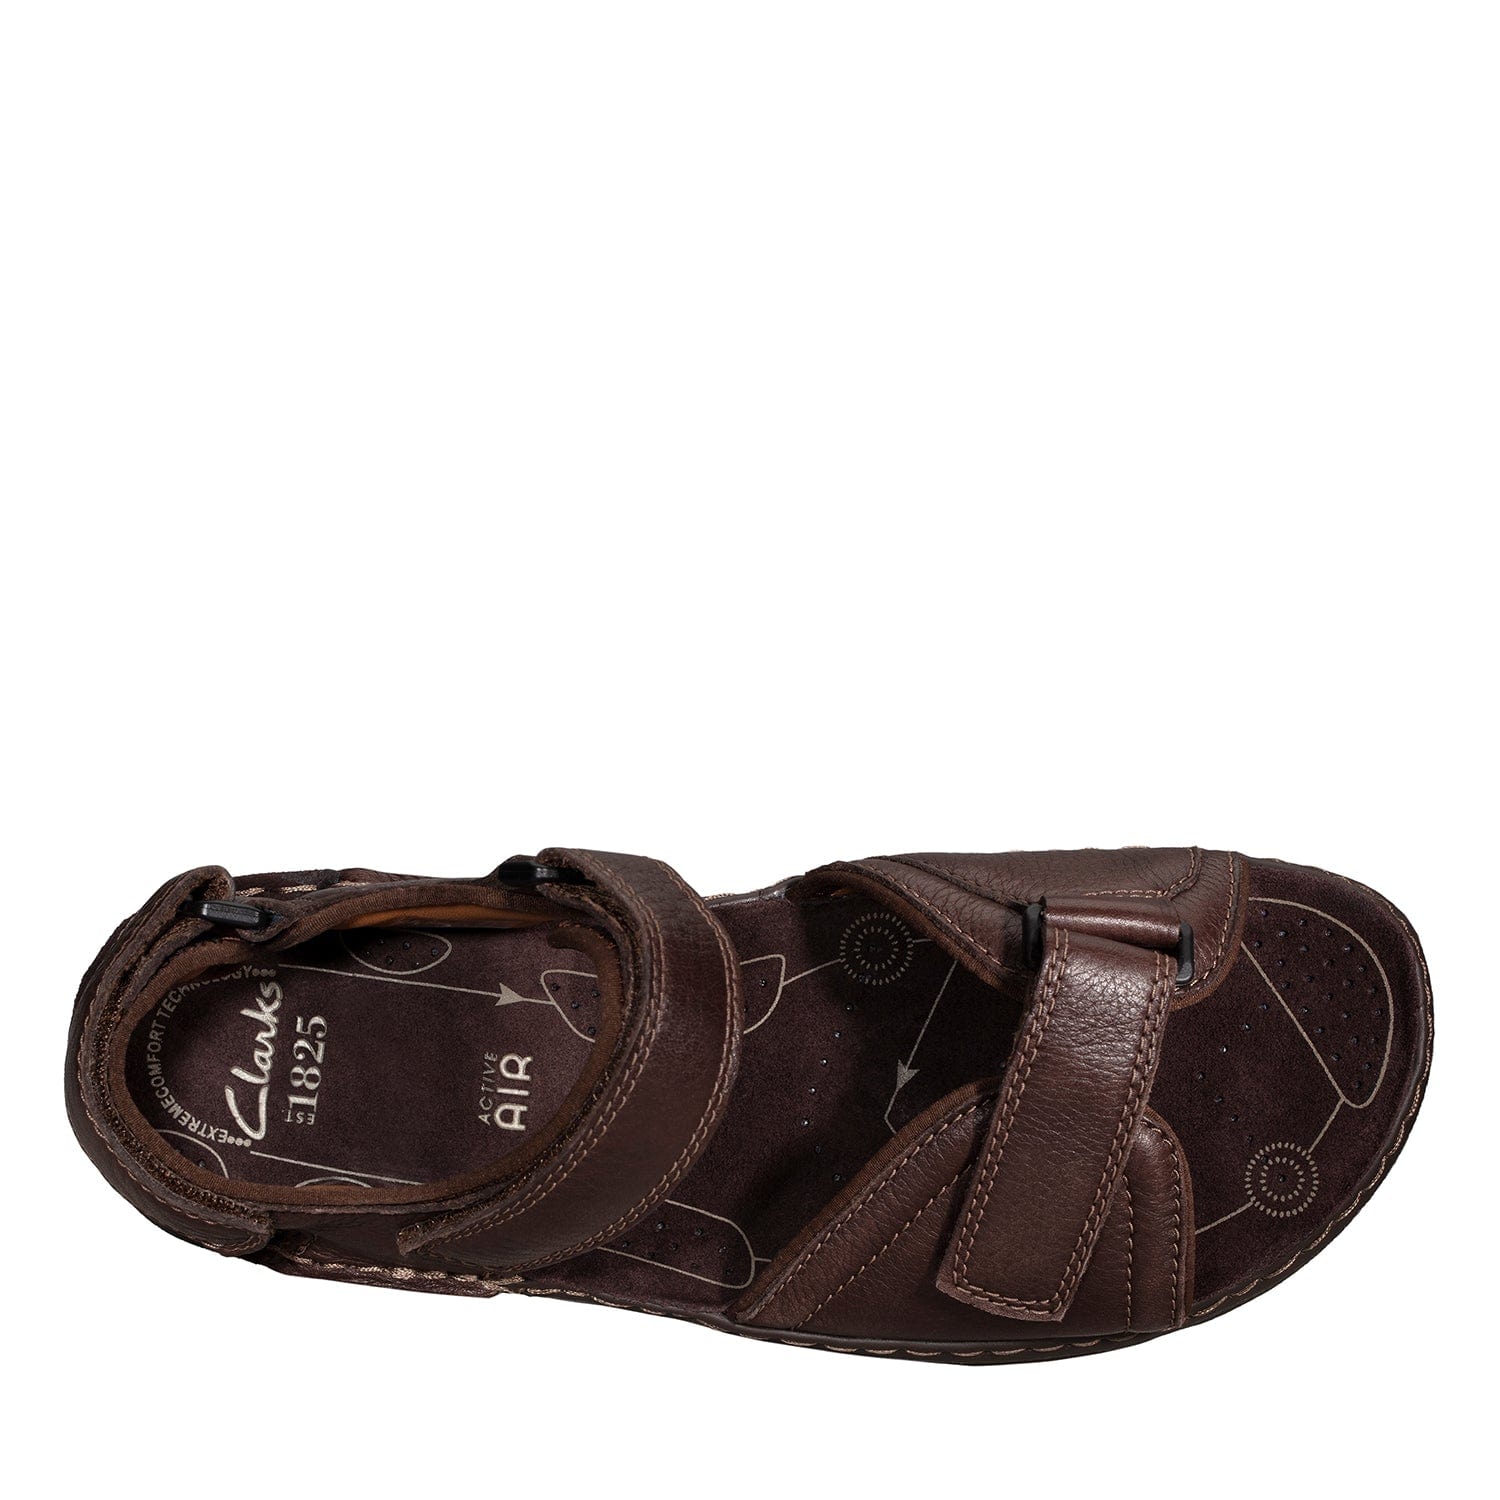 Clarks Atl Part - Sandals - Dark Brown Lea - 203531967 - G Width (Standard Fit)